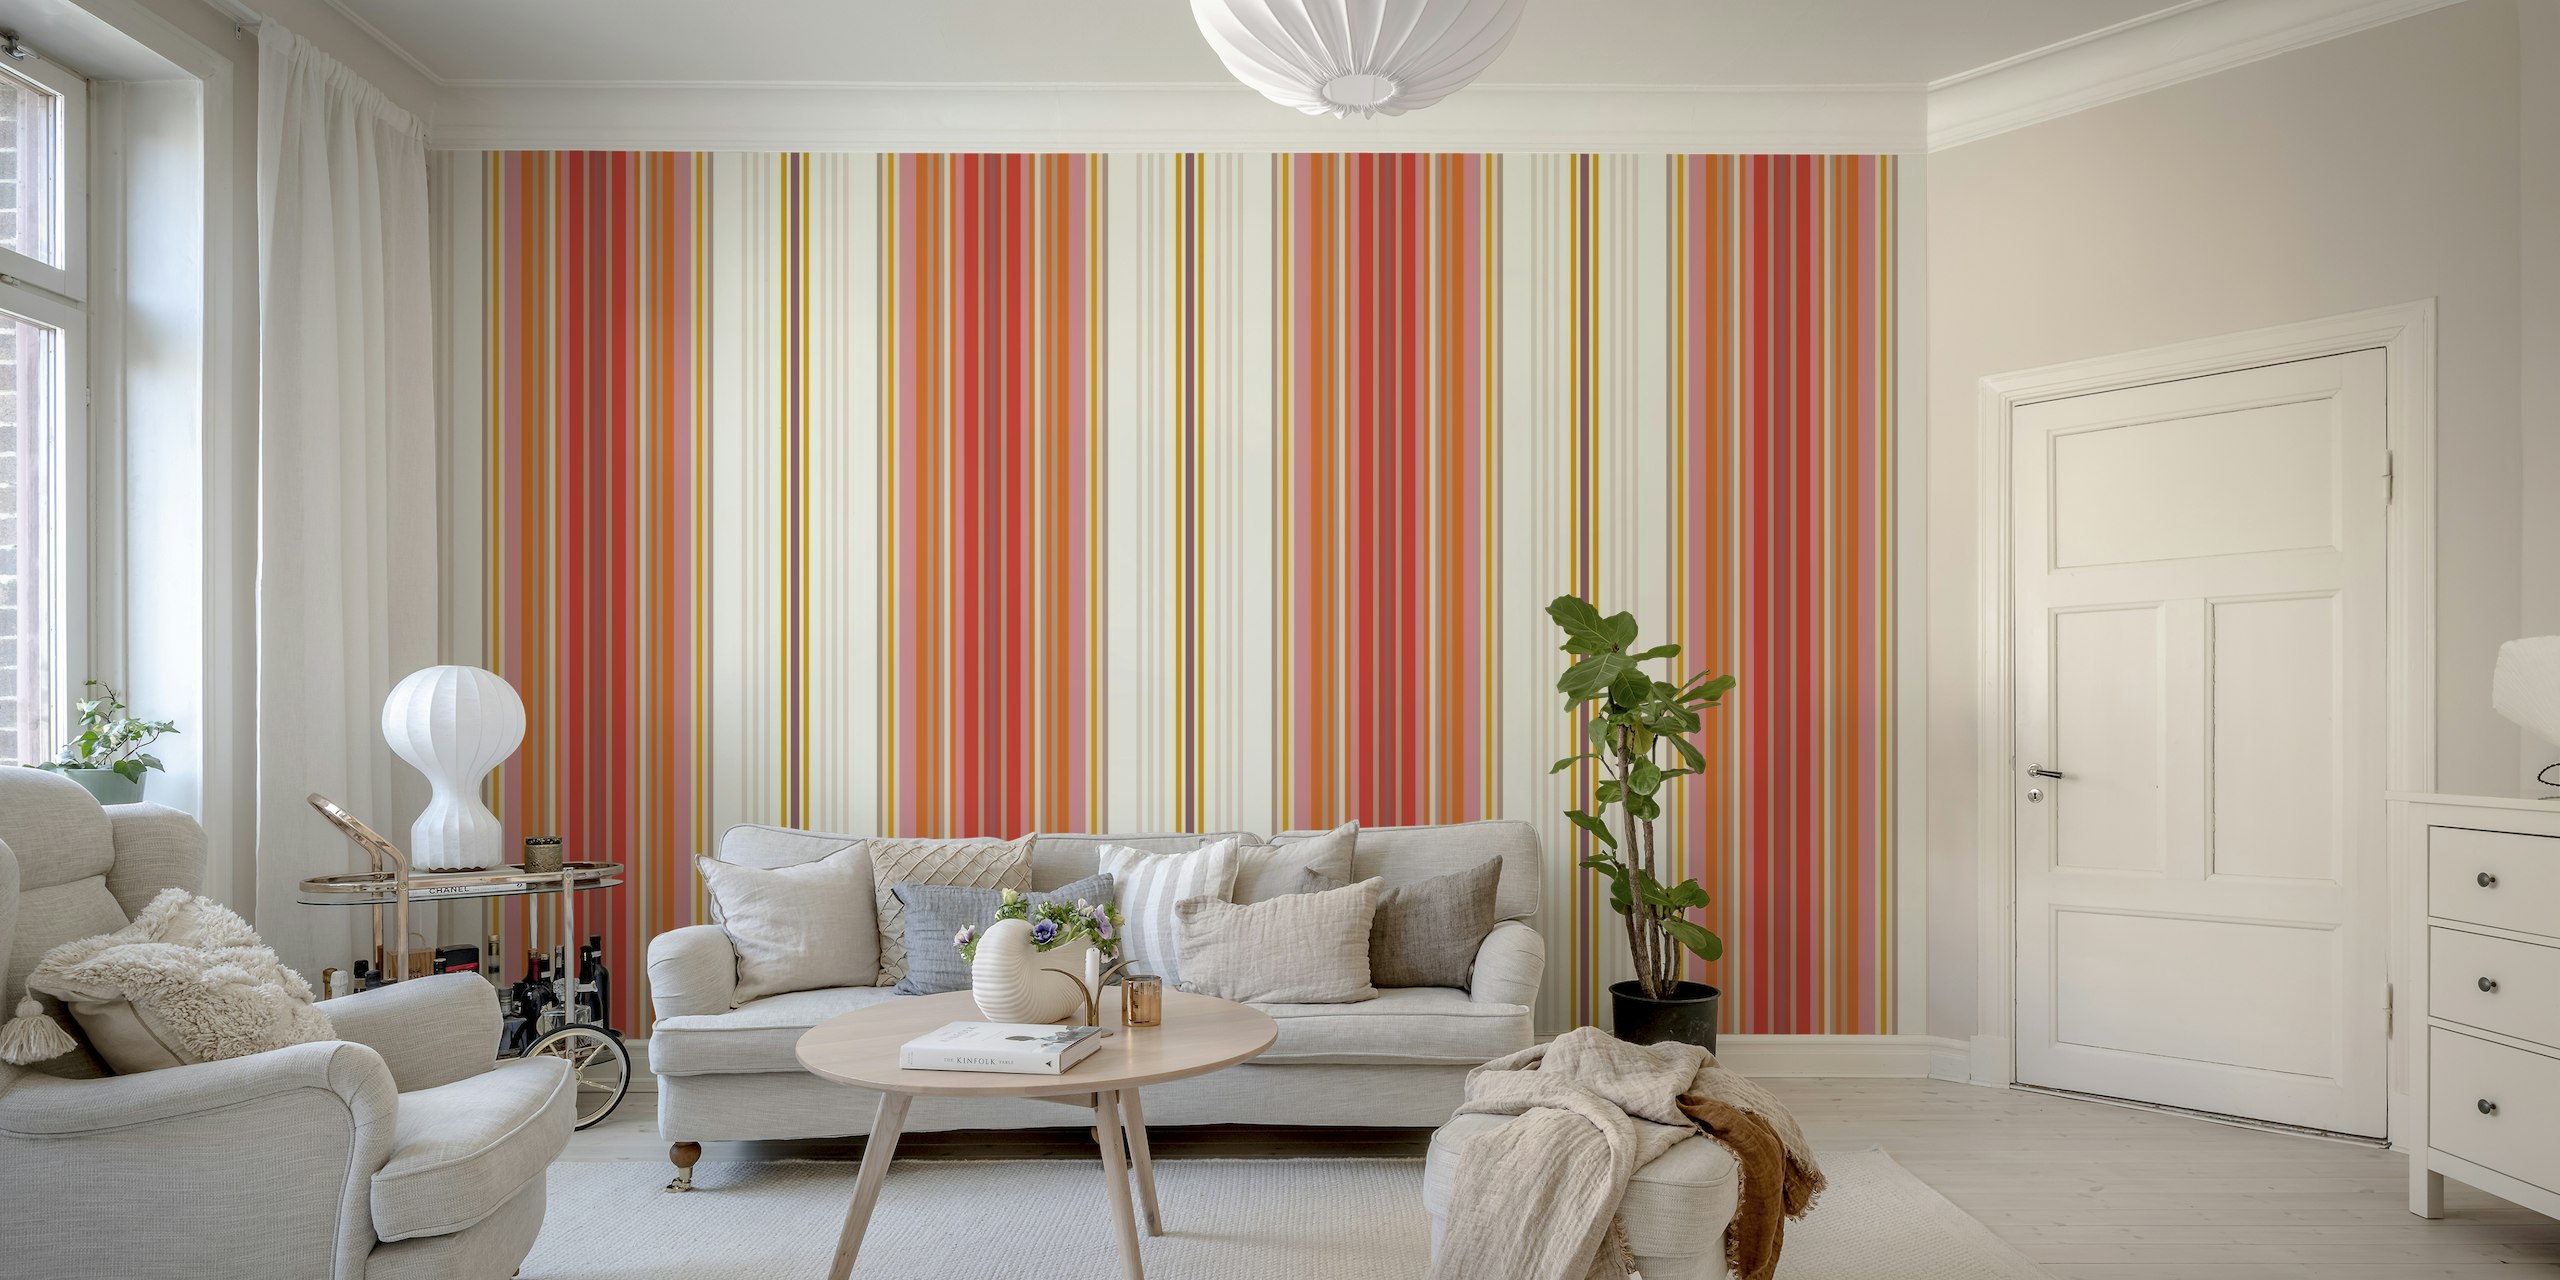 70s striped wallpaper - Red papel pintado